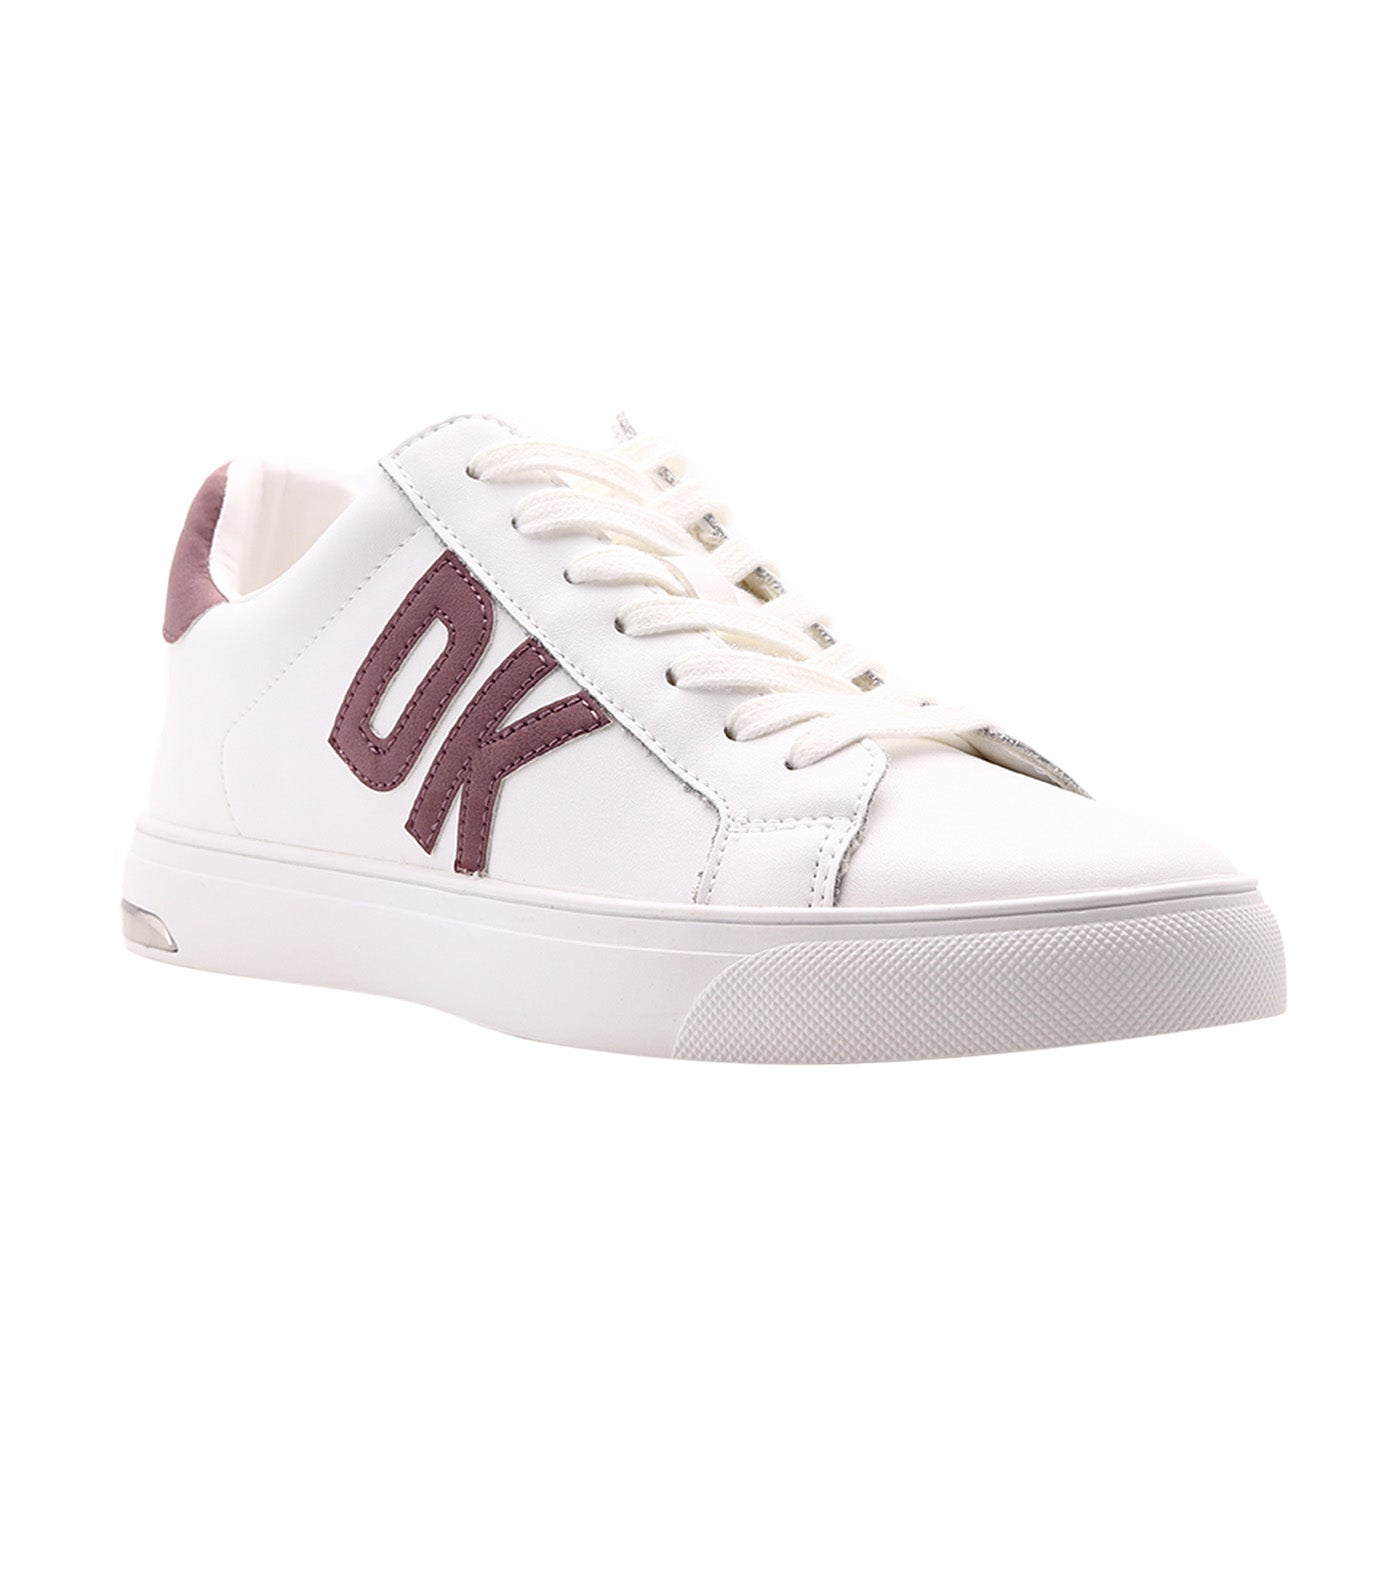 Abeni Lace Up Sneaker White/Mauve